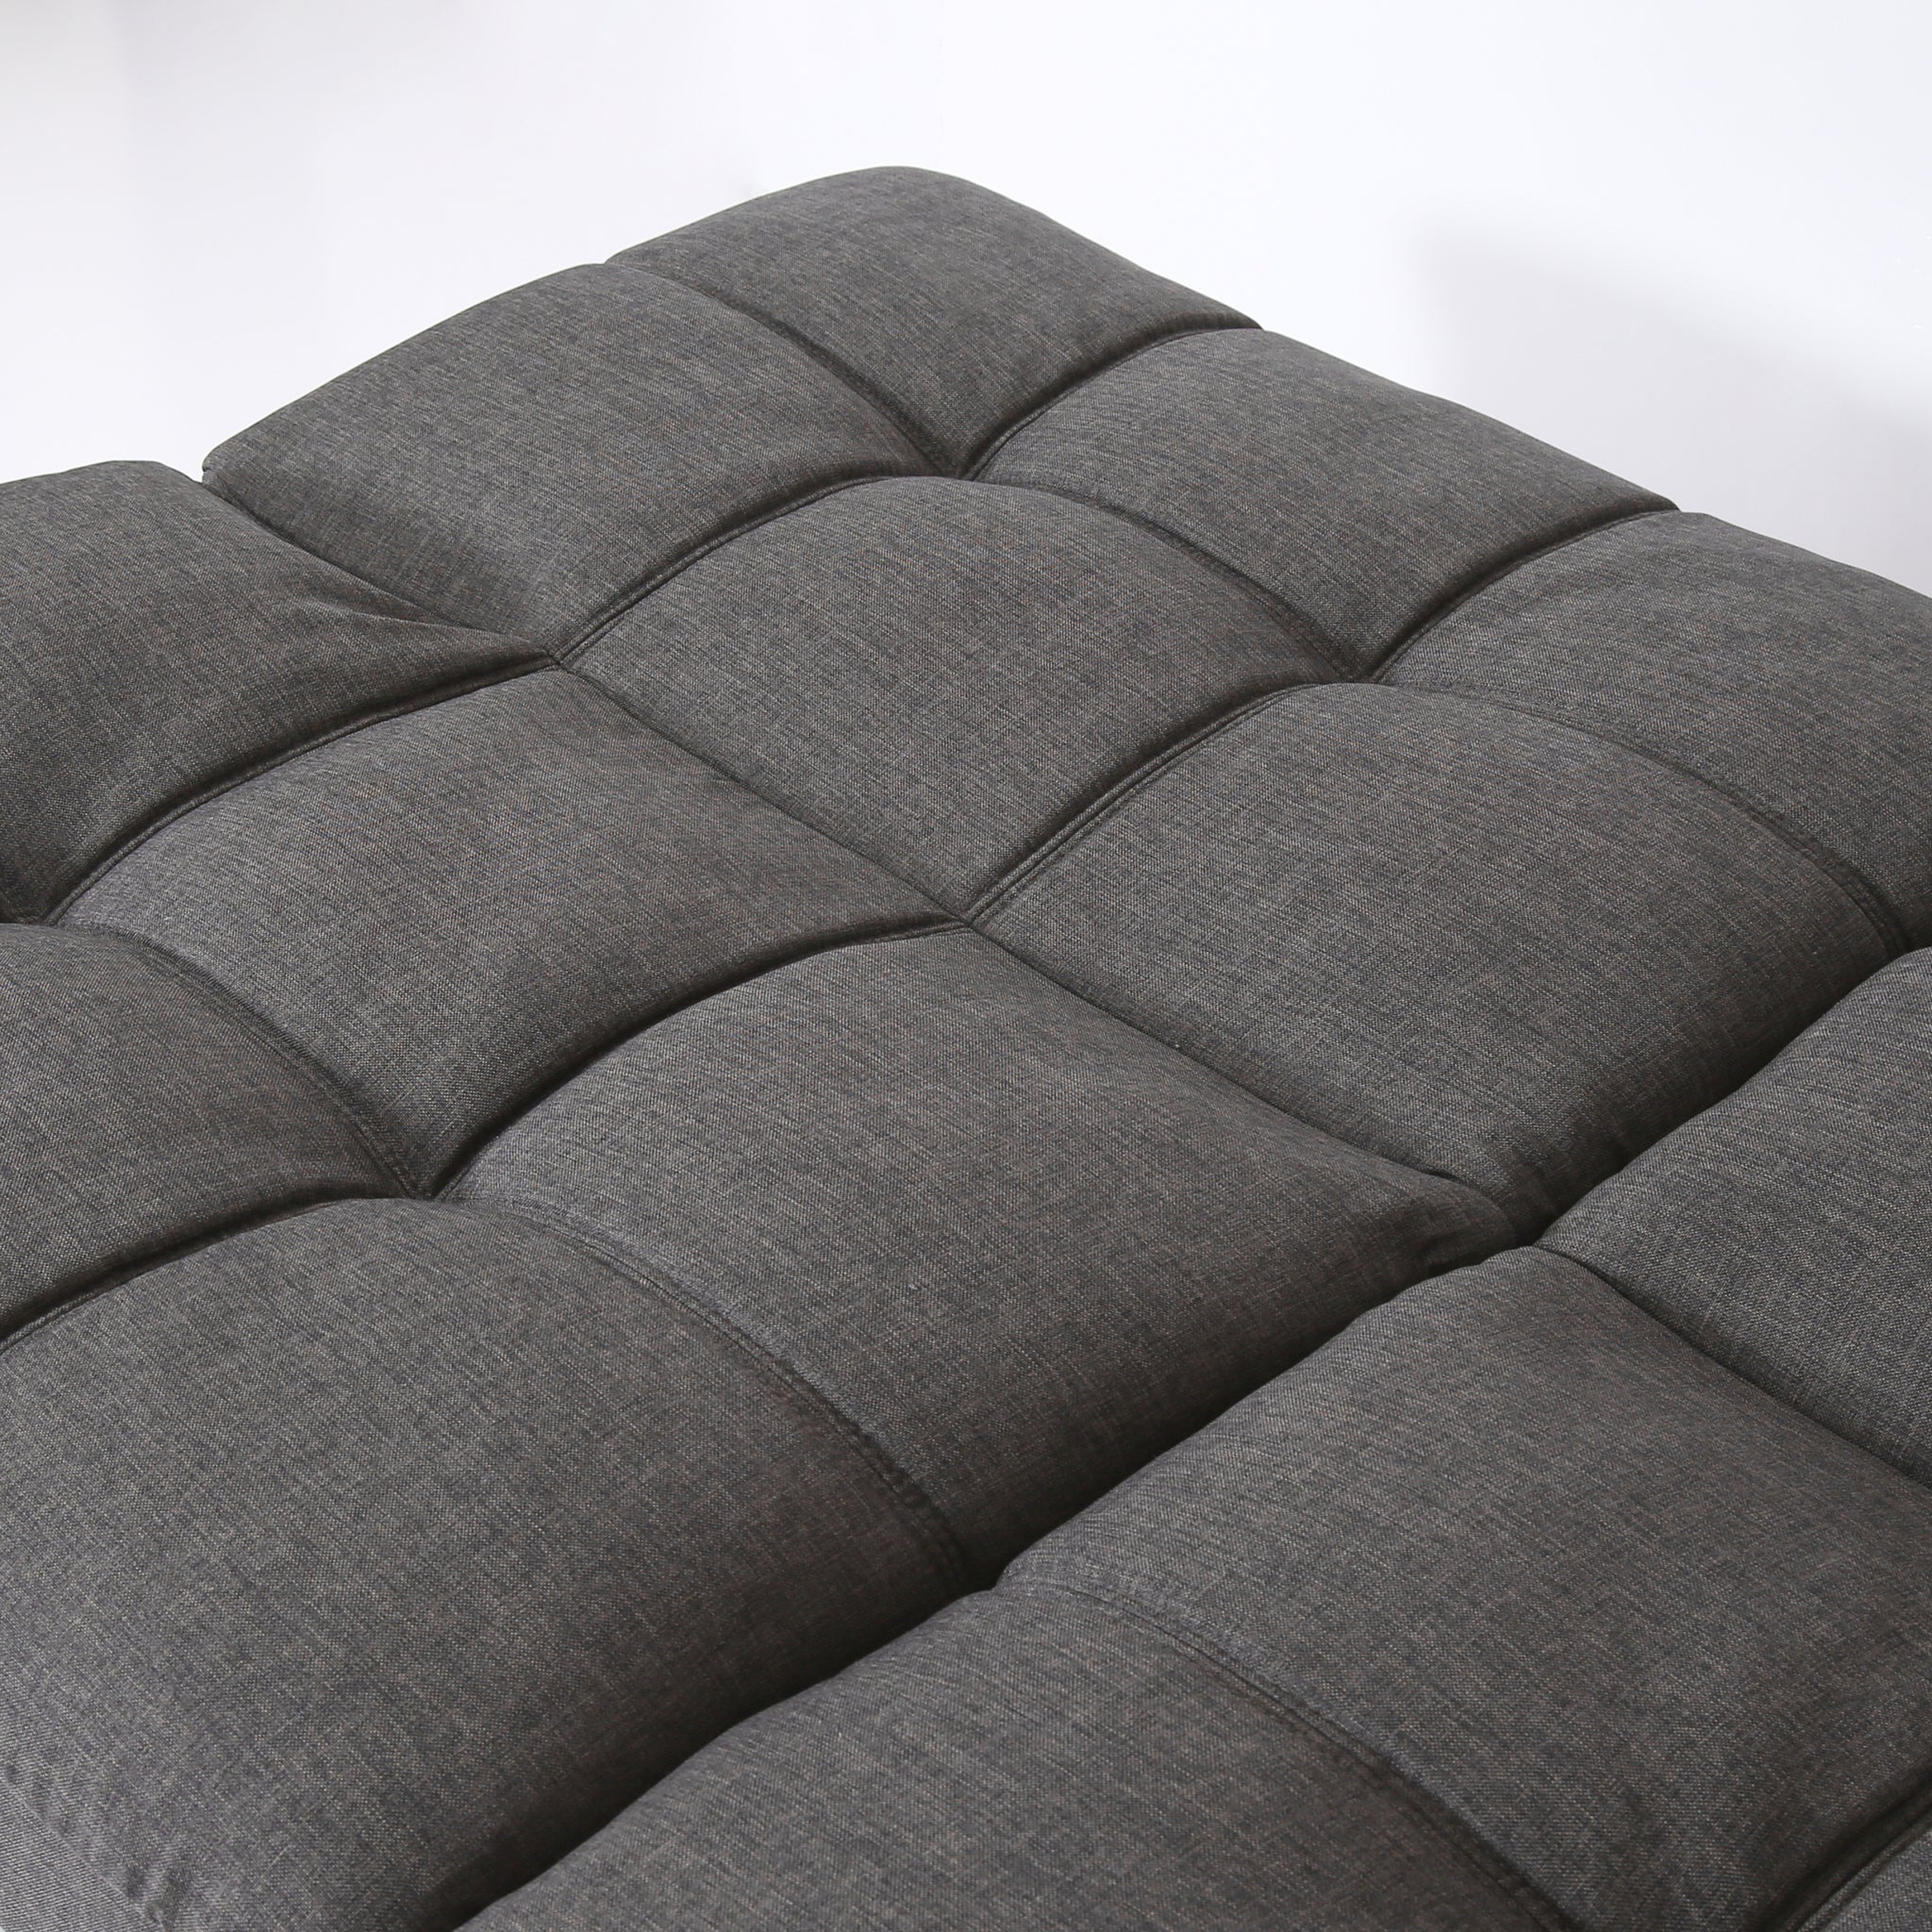 Convertible Memory Foam Futon Couch Bed, Modern dark grey-fabric